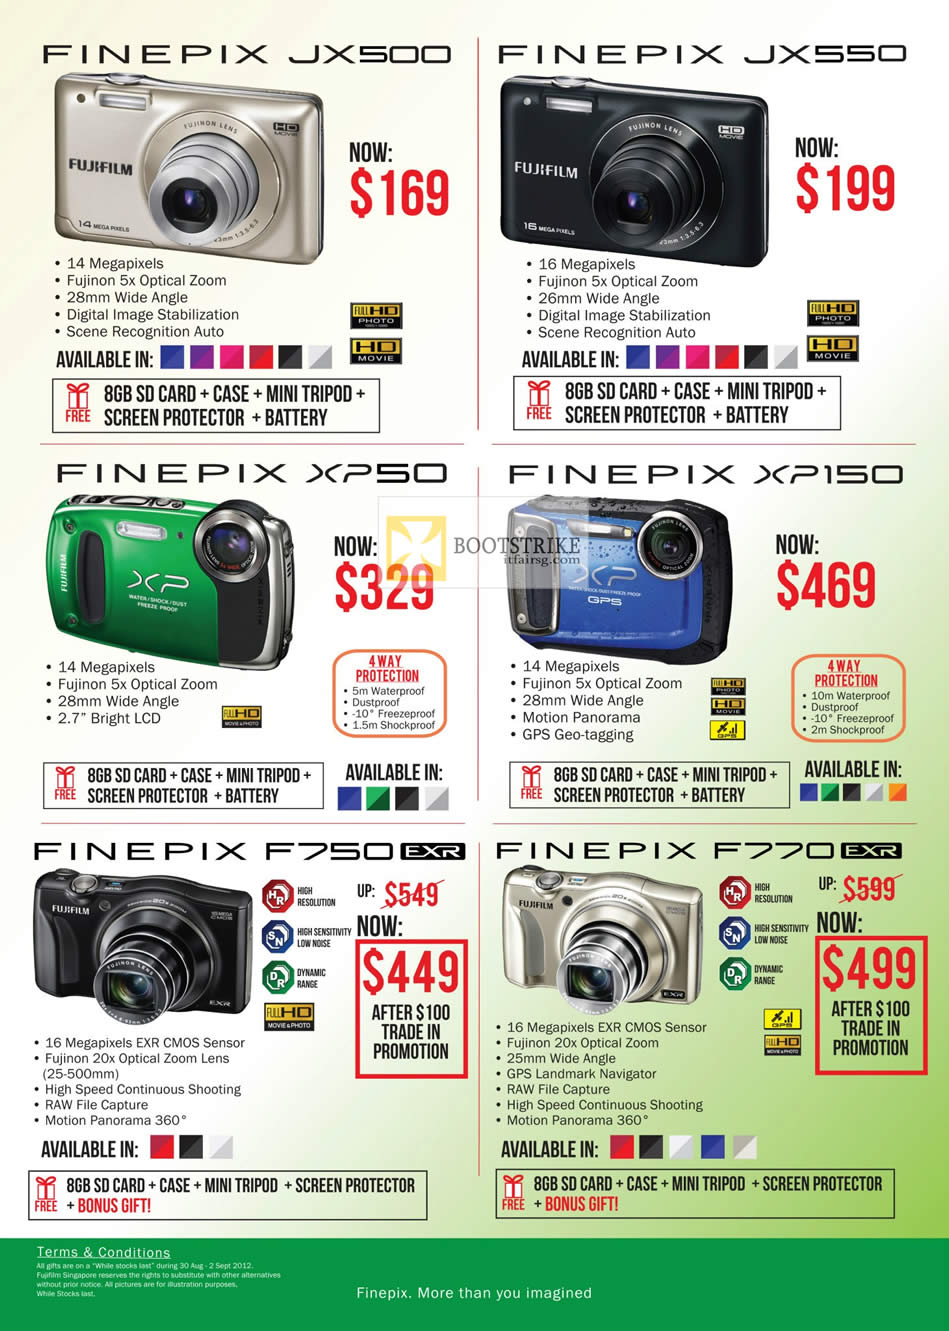 Atticus Implementeren Deter Fujifilm Digital Cameras Finepix JX500, JX550, XP150, XP50, F750, F770  COMEX 2012 Price List Brochure Flyer Image